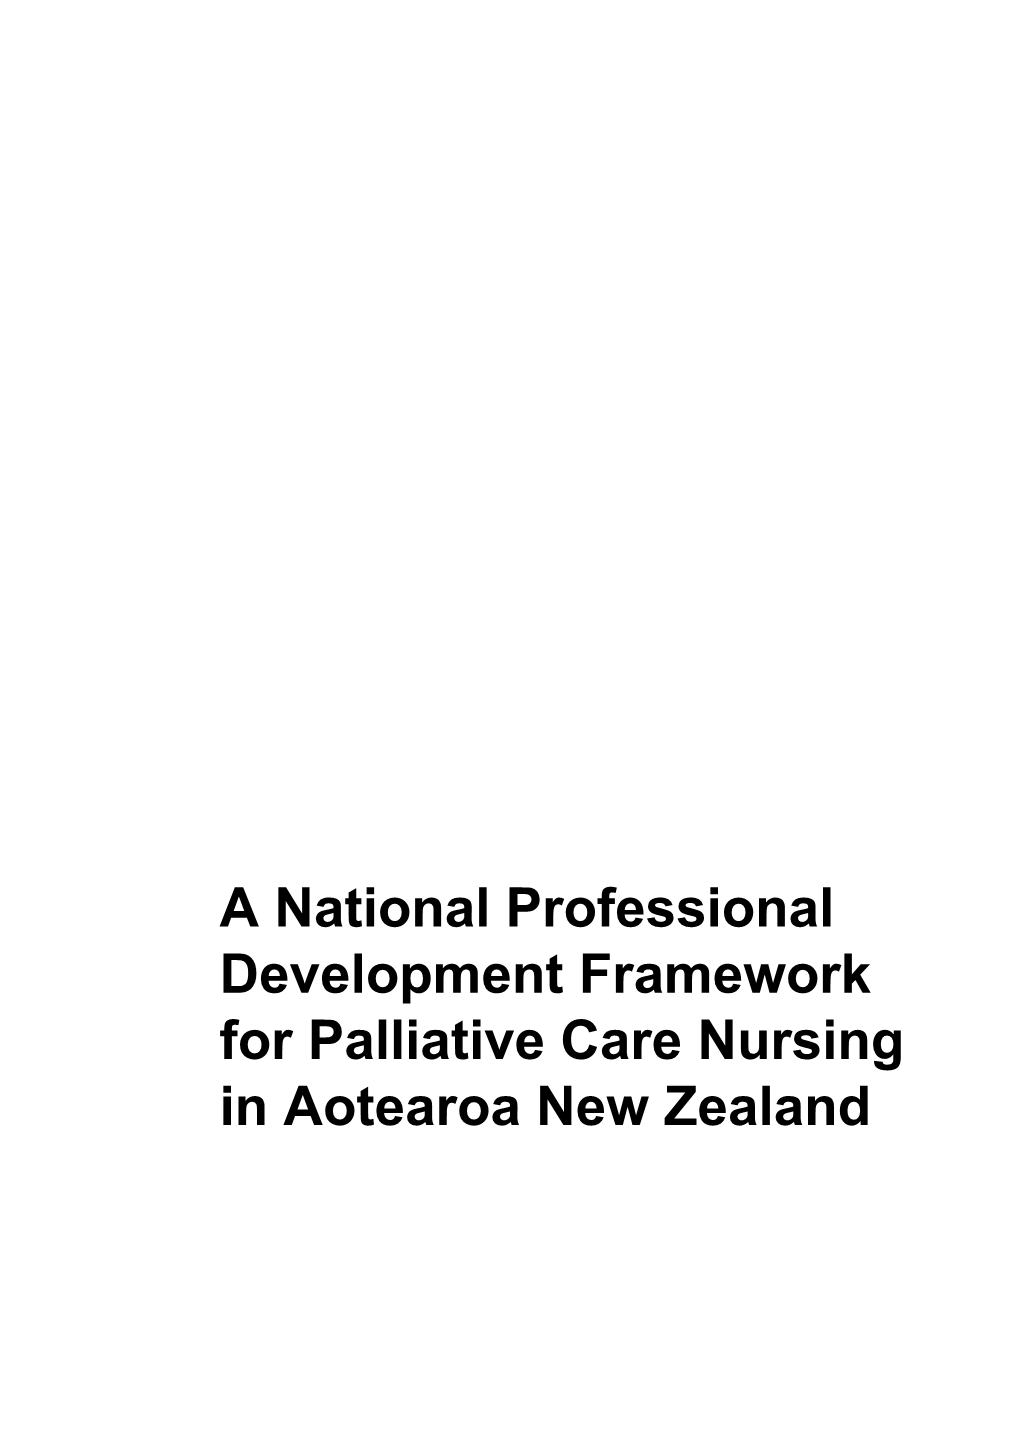 A National Professional Development Framework for Palliative Care Nursing in Aotearoa New